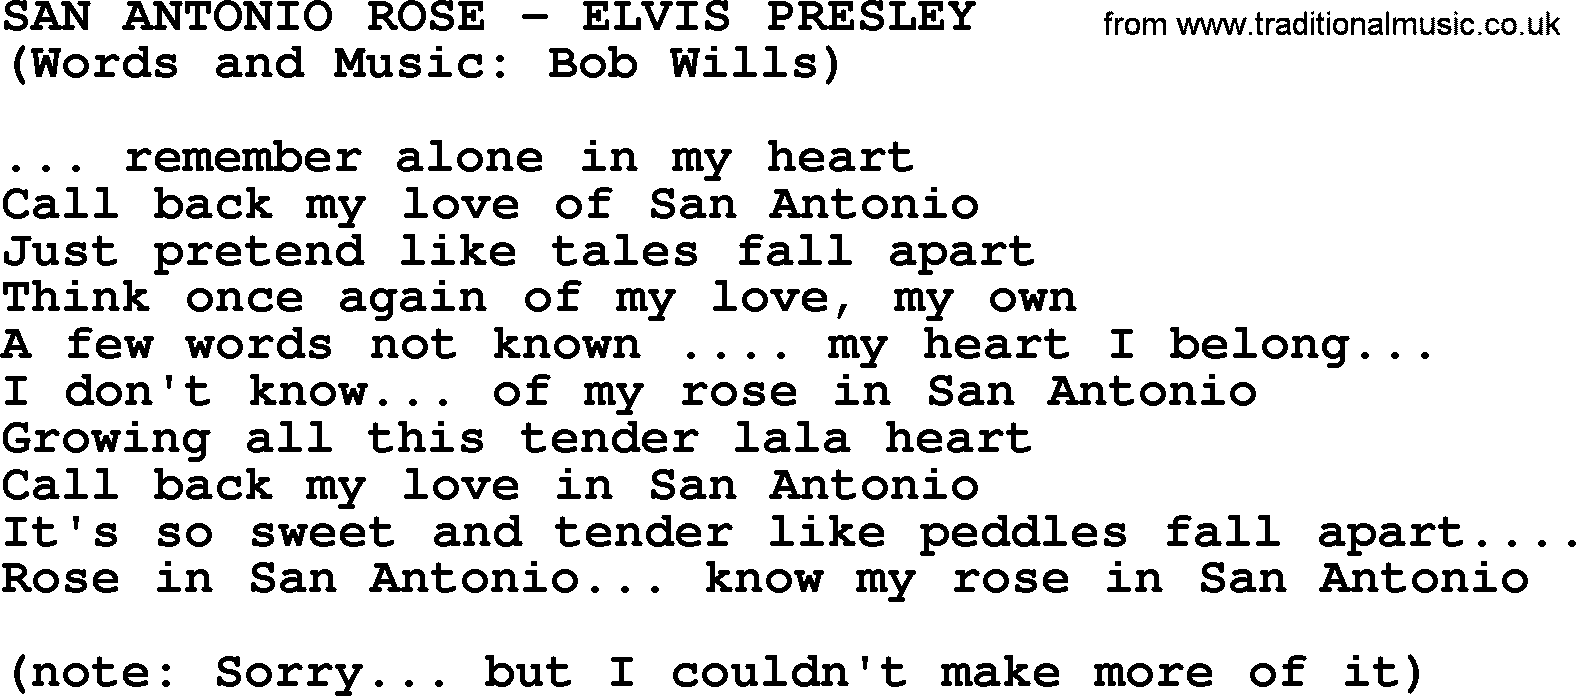 Elvis Presley song: San Antonio Rose lyrics